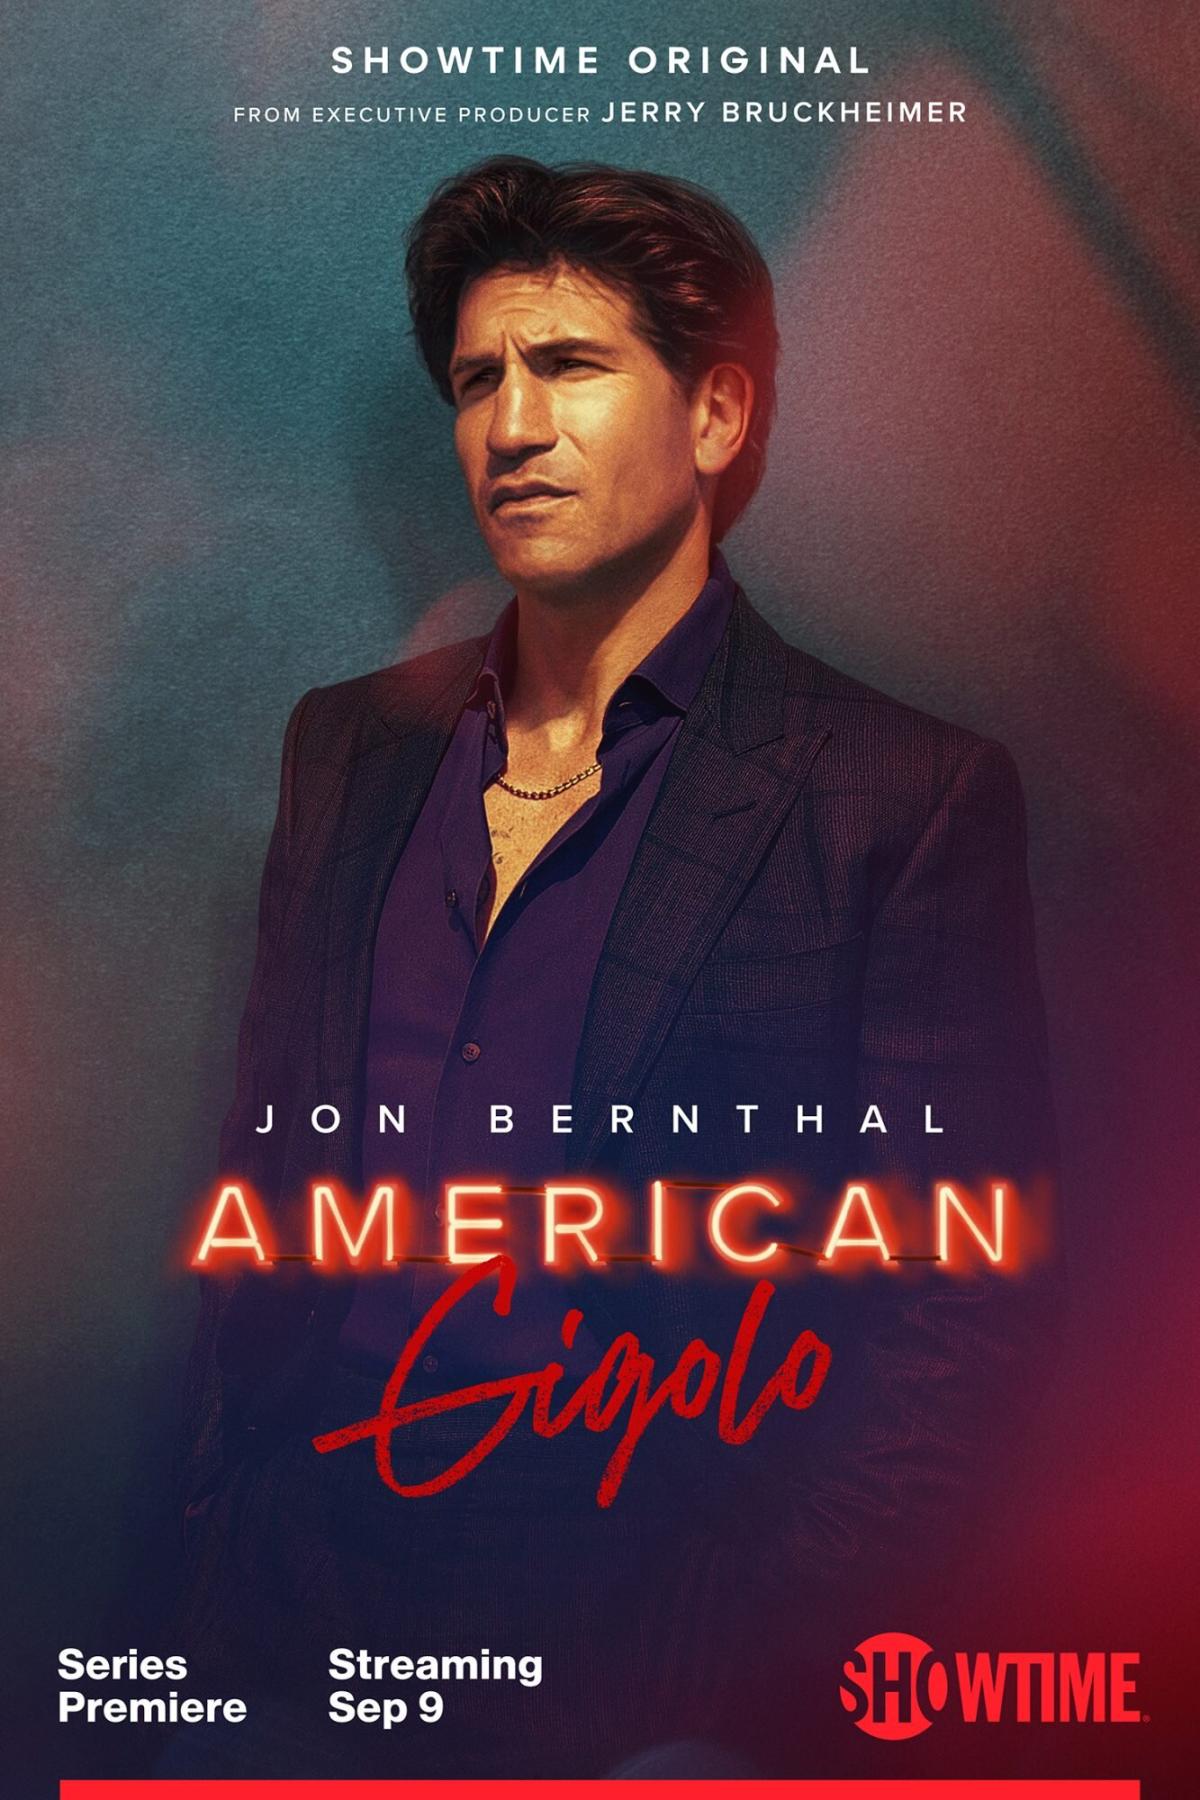 New American Gigolo Remake Trailer Sees Jon Bernthal as Former Male Escort Julian Kaye pic